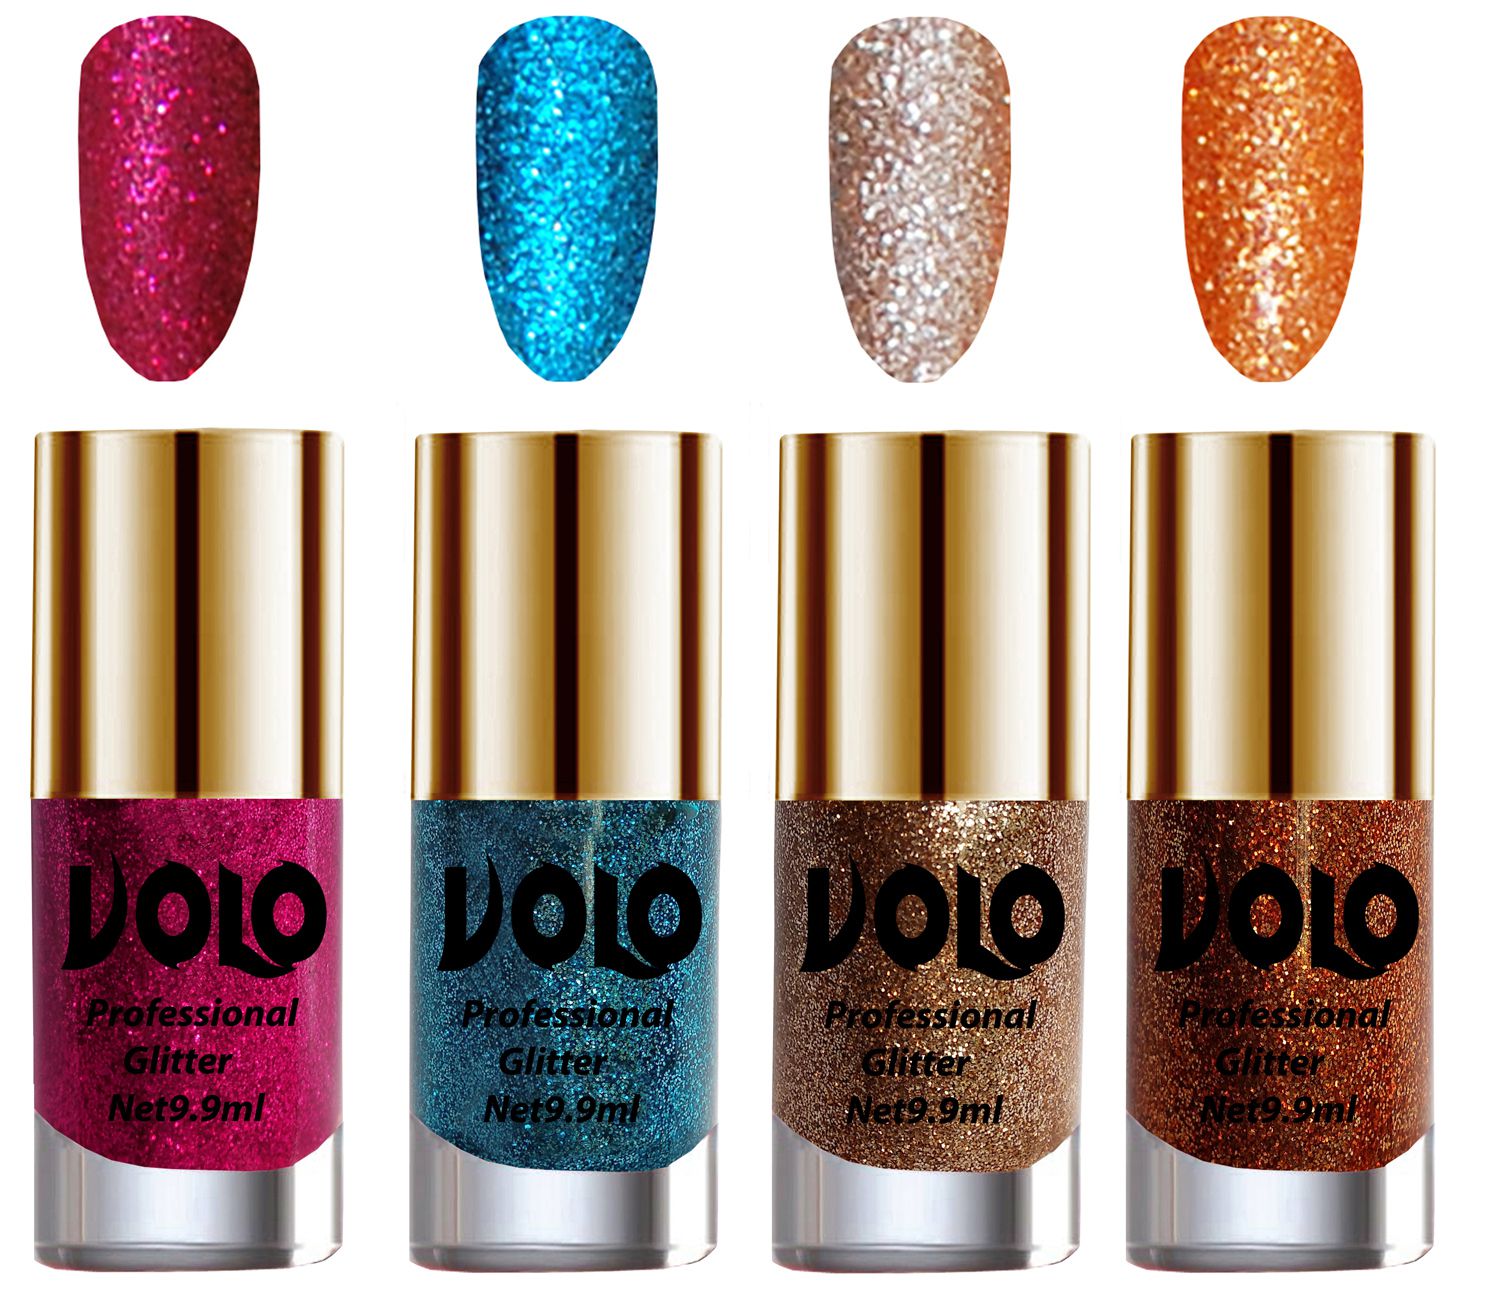     			VOLO Professionally Used Glitter Shine Nail Polish Magenta,Blue,Gold Orange Pack of 4 39 mL